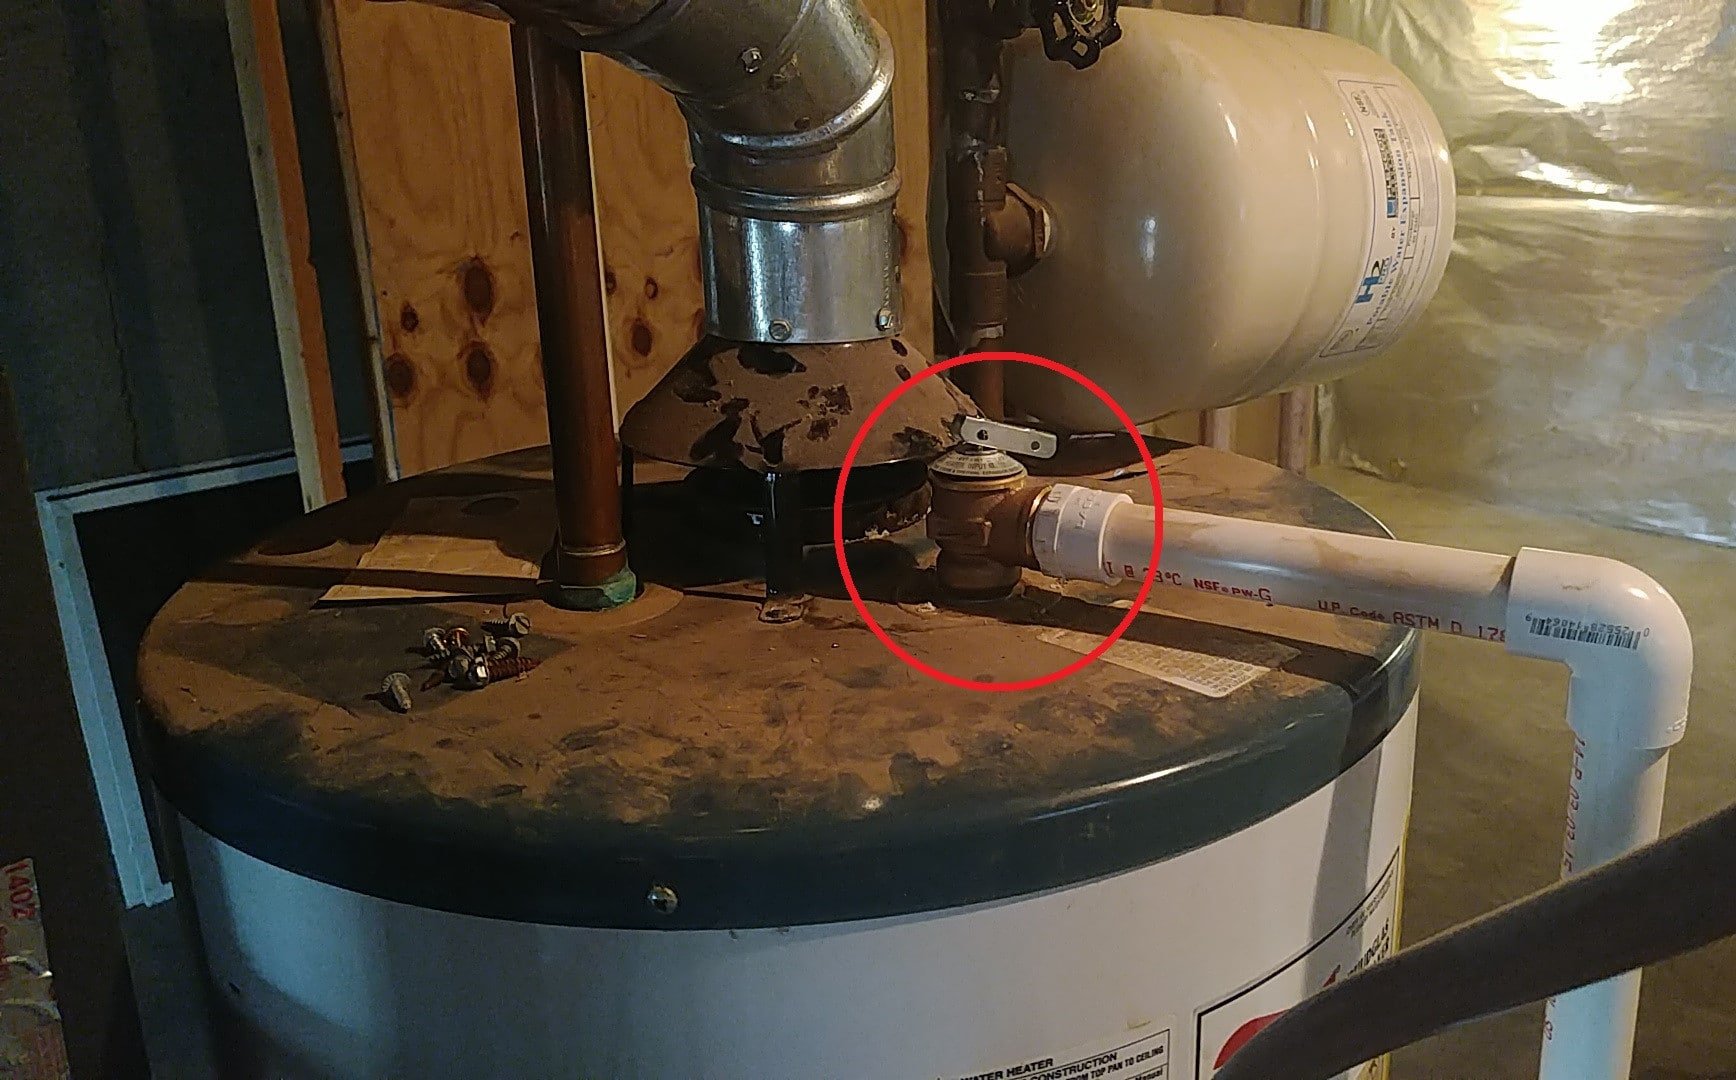 https://www.corroprotec.com/app/uploads/2022/07/water-heater-pressure-valve-leaking-1.jpg